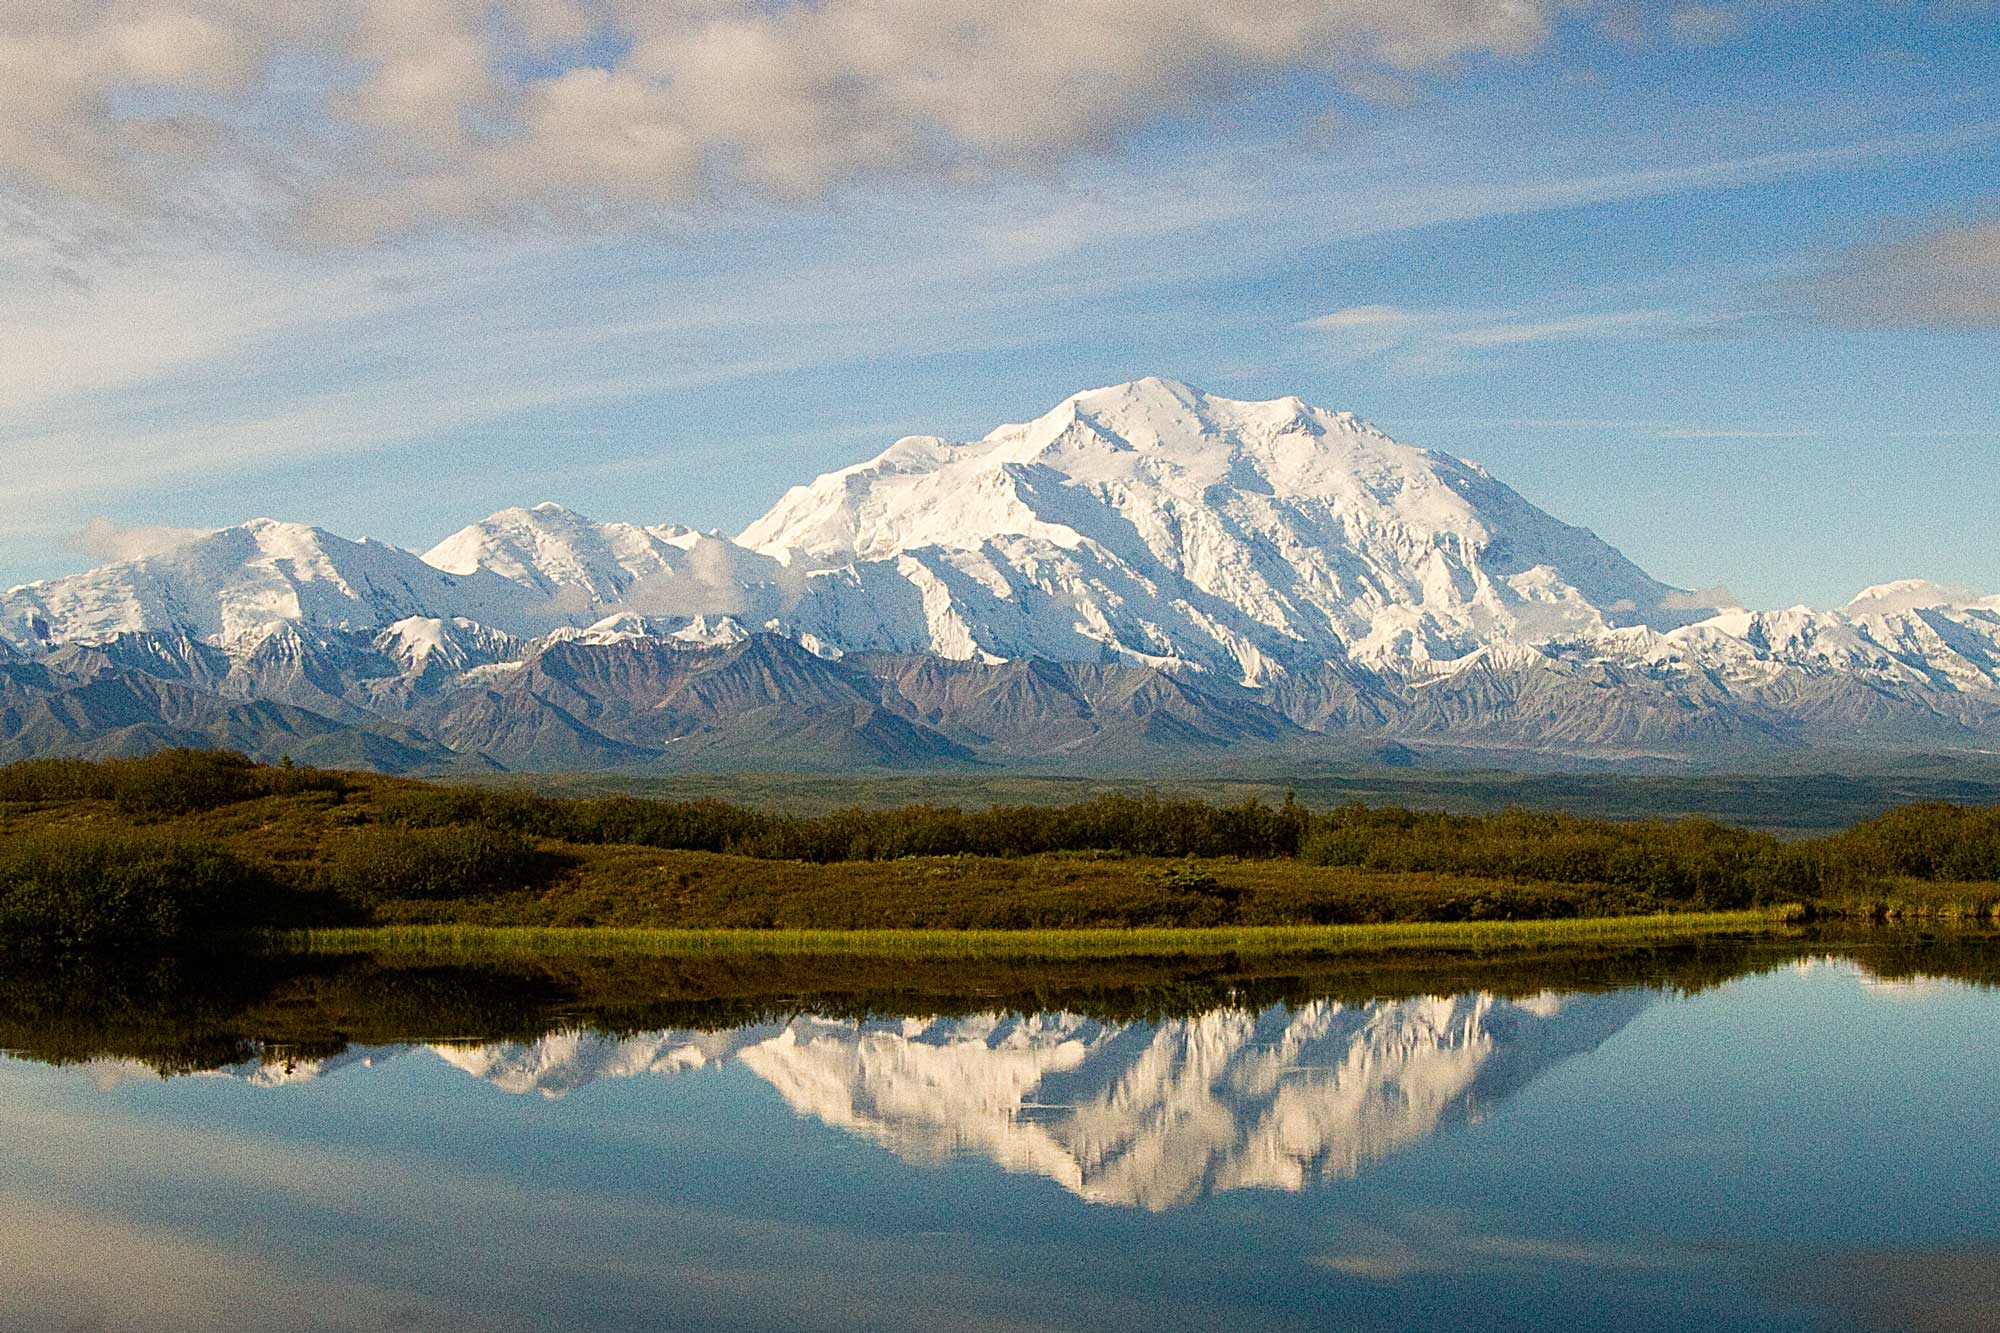 Photograph of Denali in Alaska.